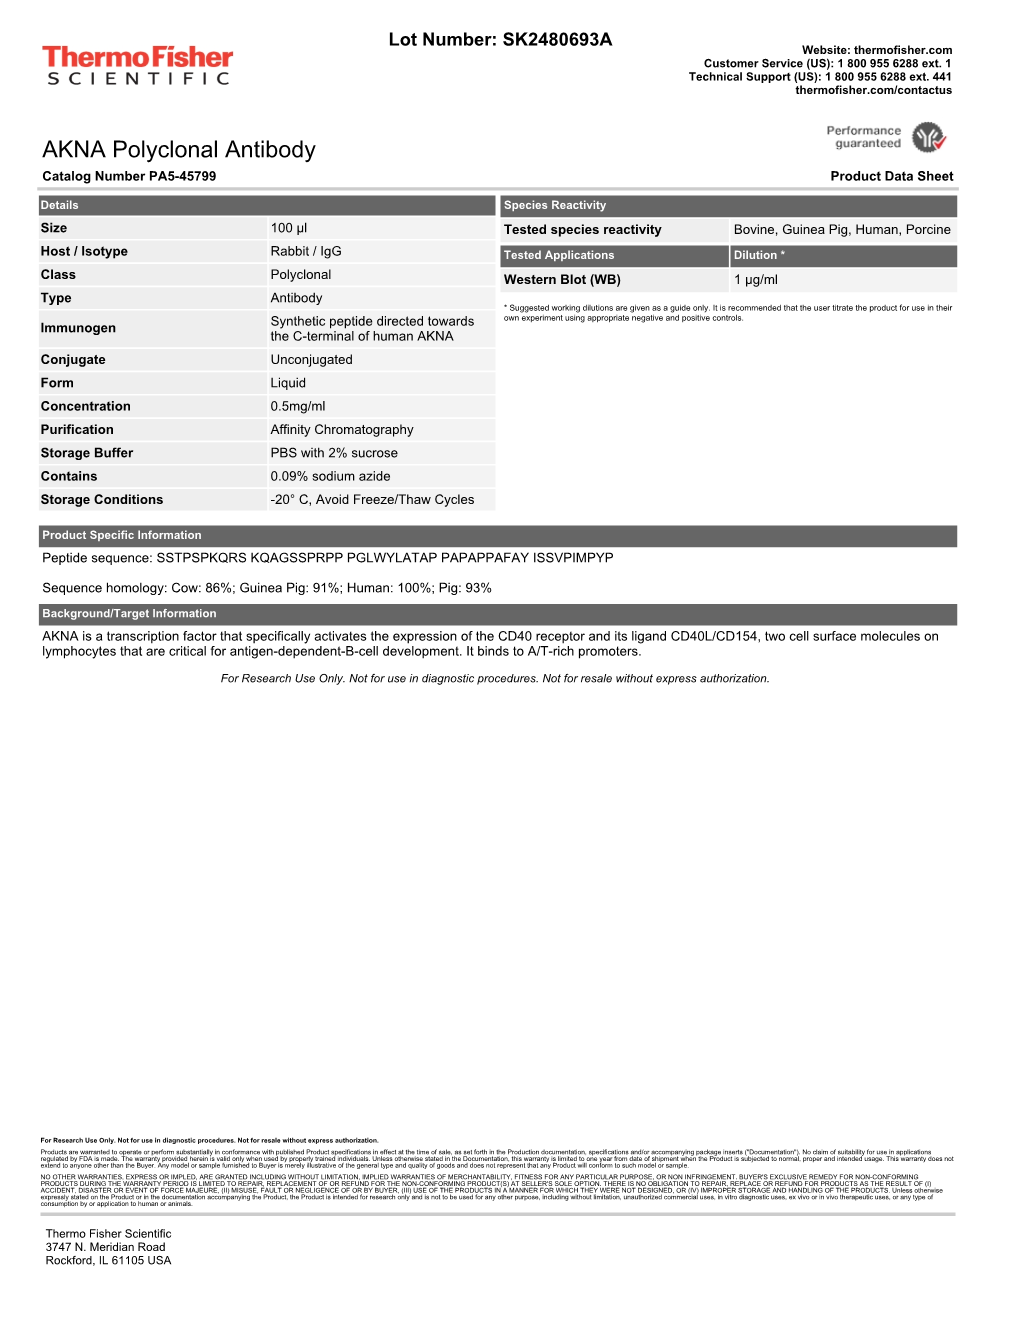 AKNA Polyclonal Antibody Catalog Number PA5-45799 Product Data Sheet